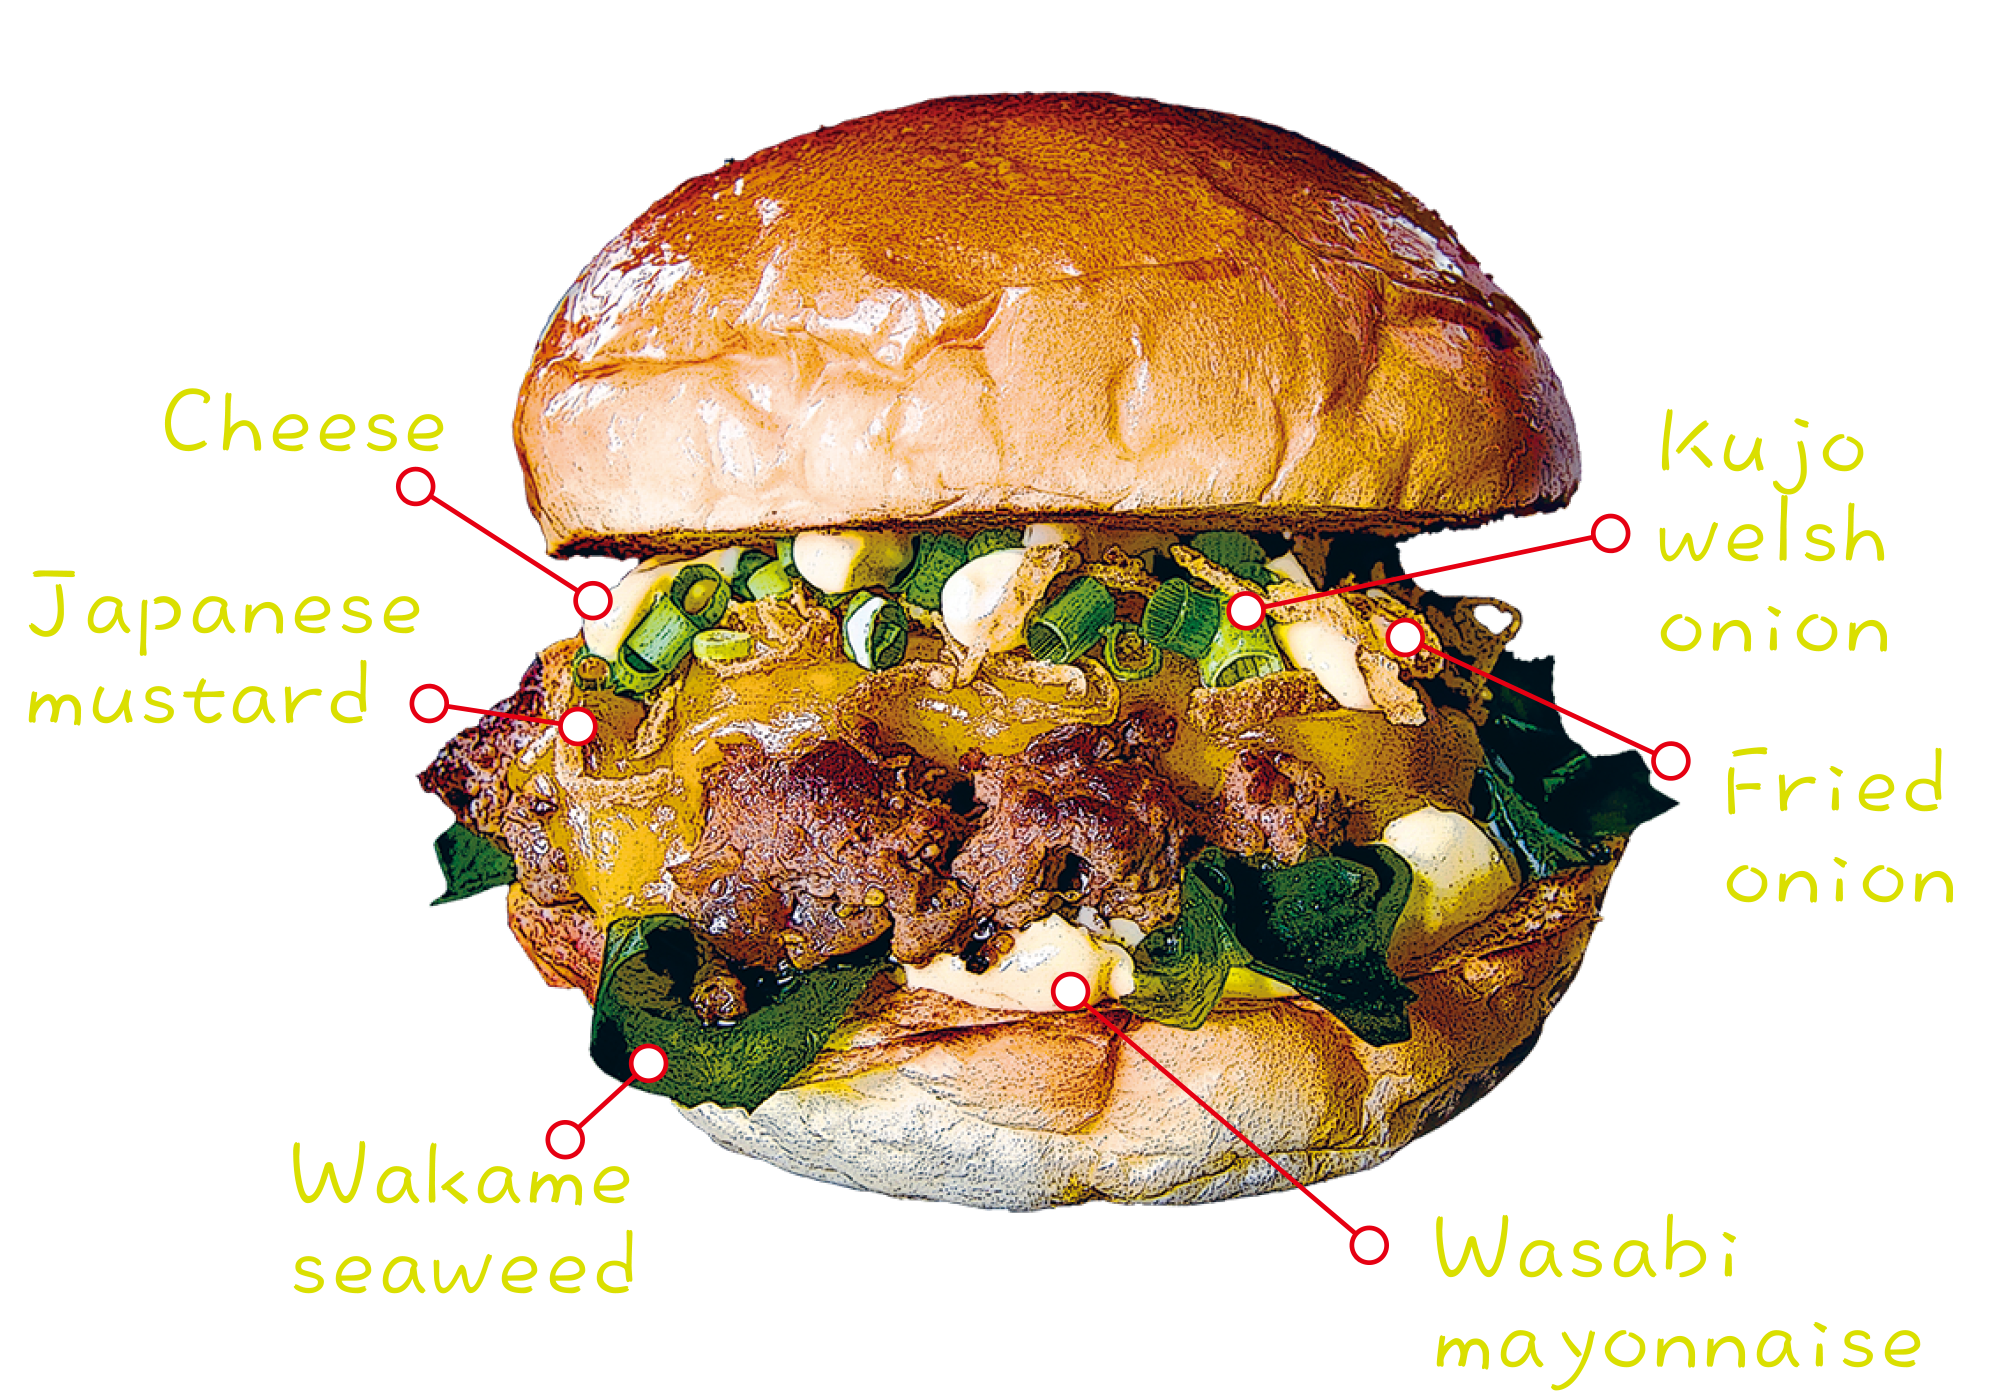 Wasabi burger